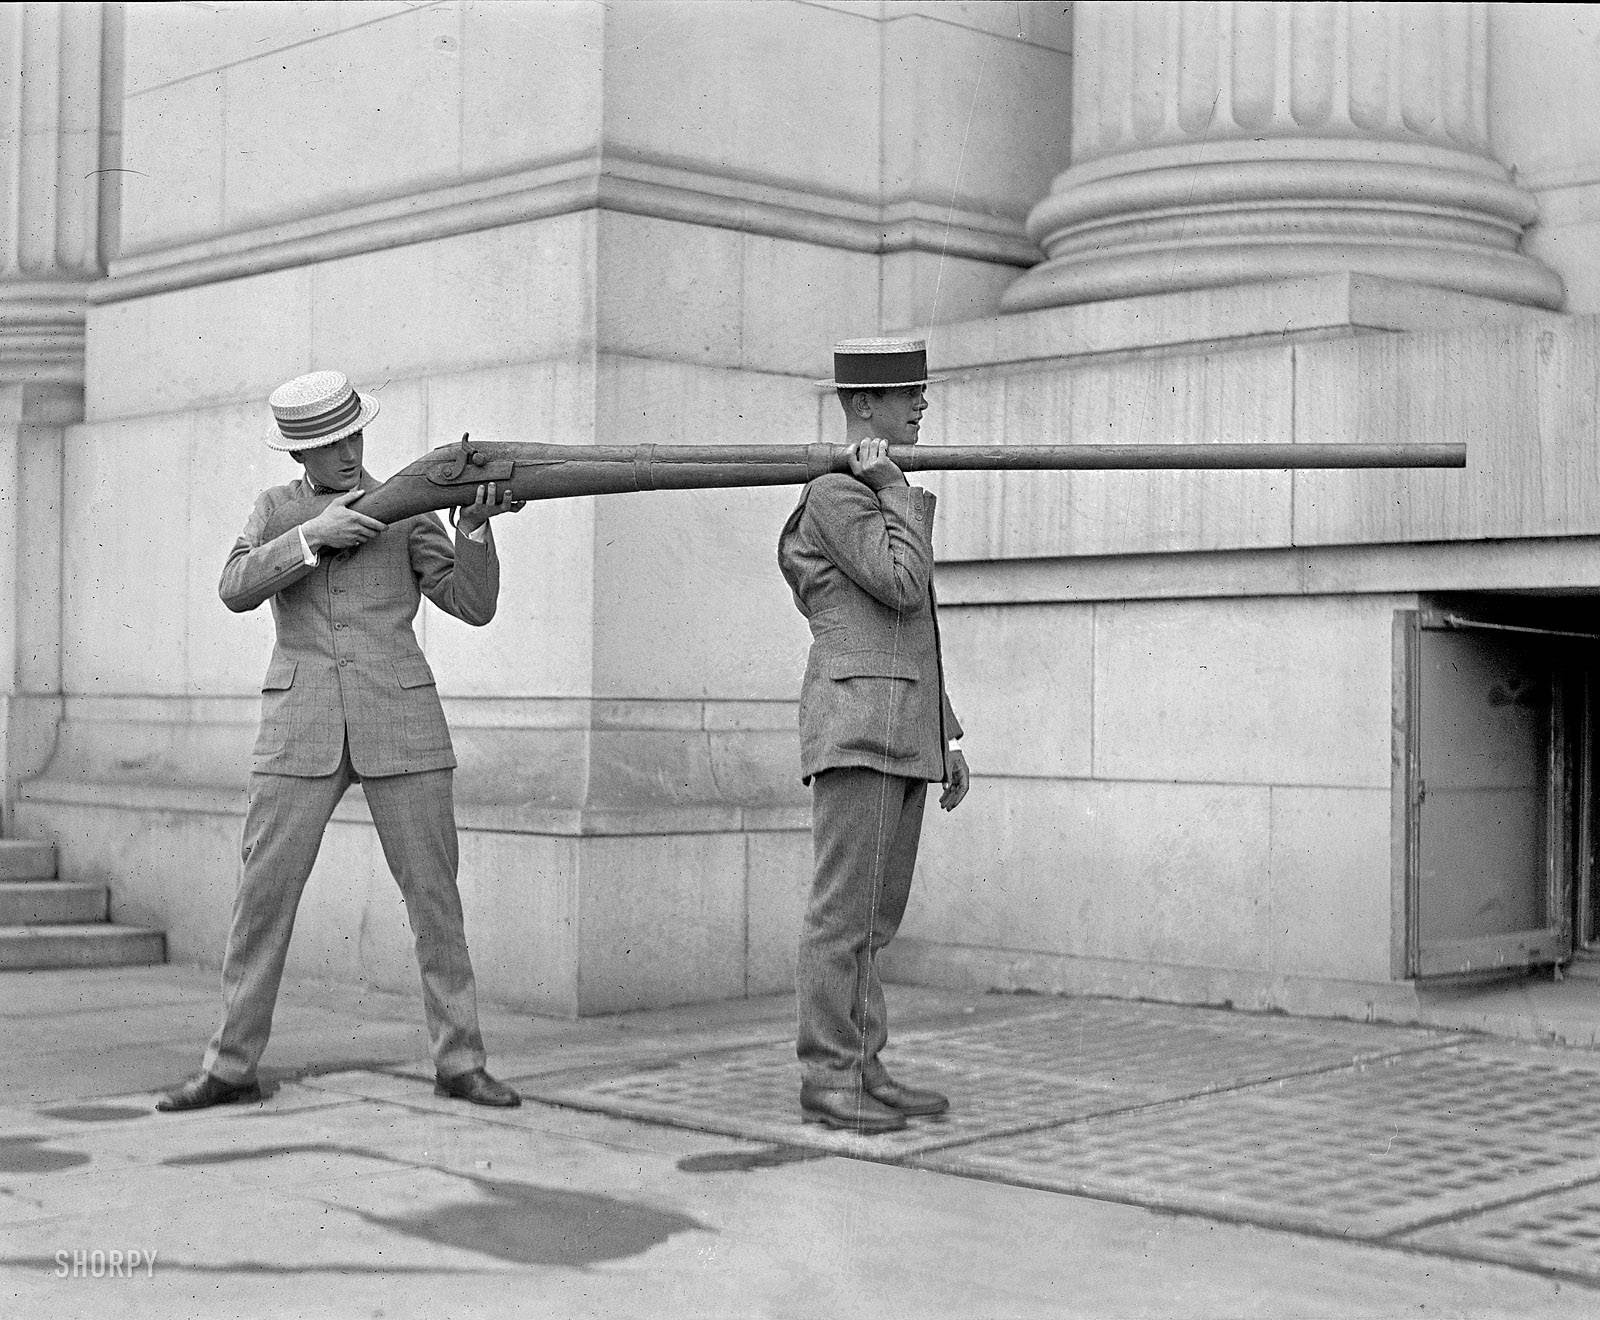 fascinating historical photos - big gun - Shorpy